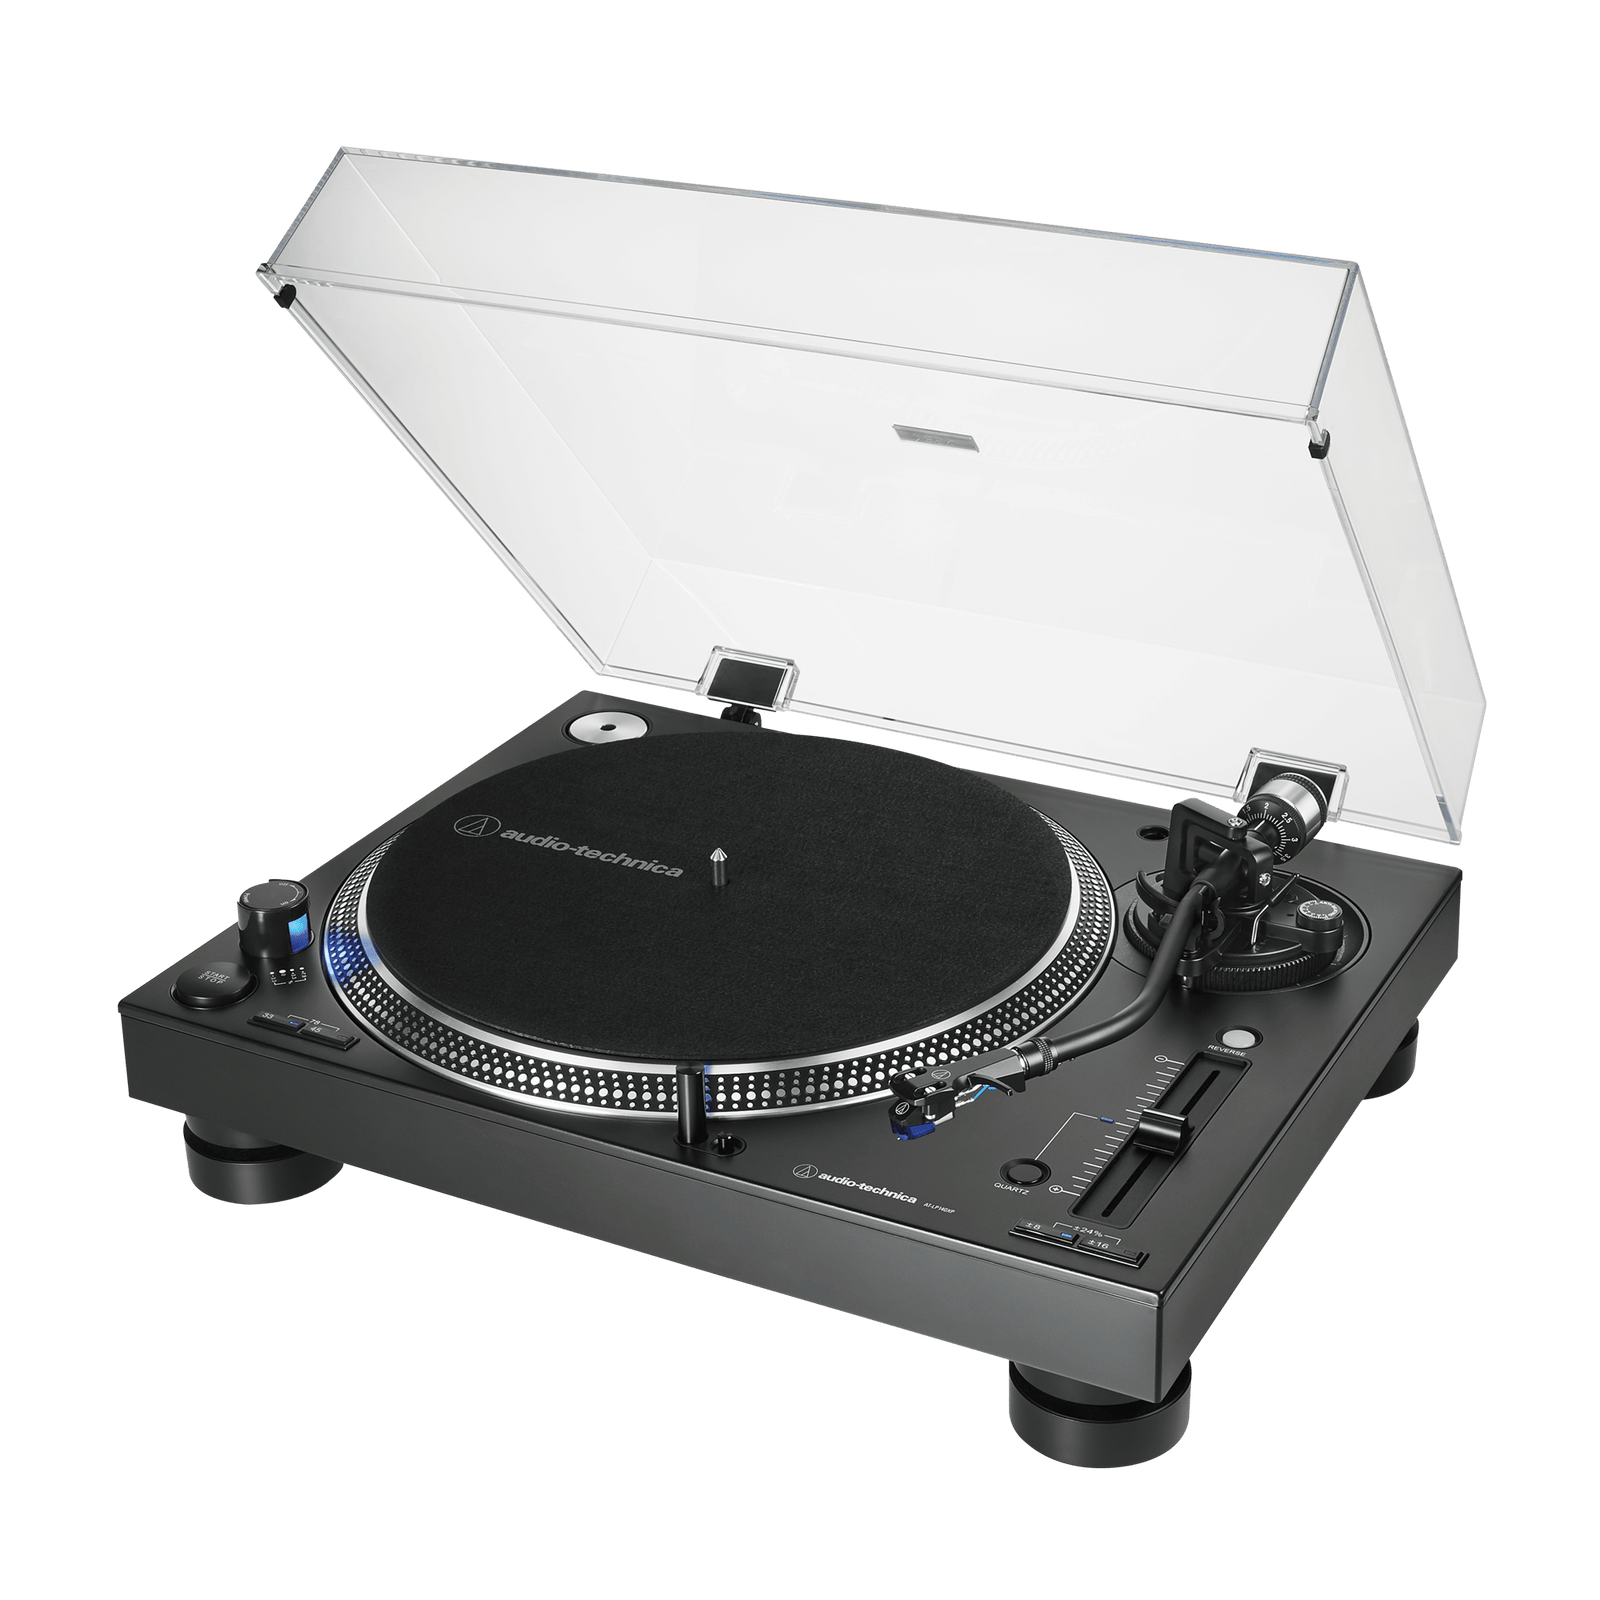 AUDIO-TECHNICA AT-LP140XP DIRECT-DRIVE PROFESSIONAL DJ TURNTABLE